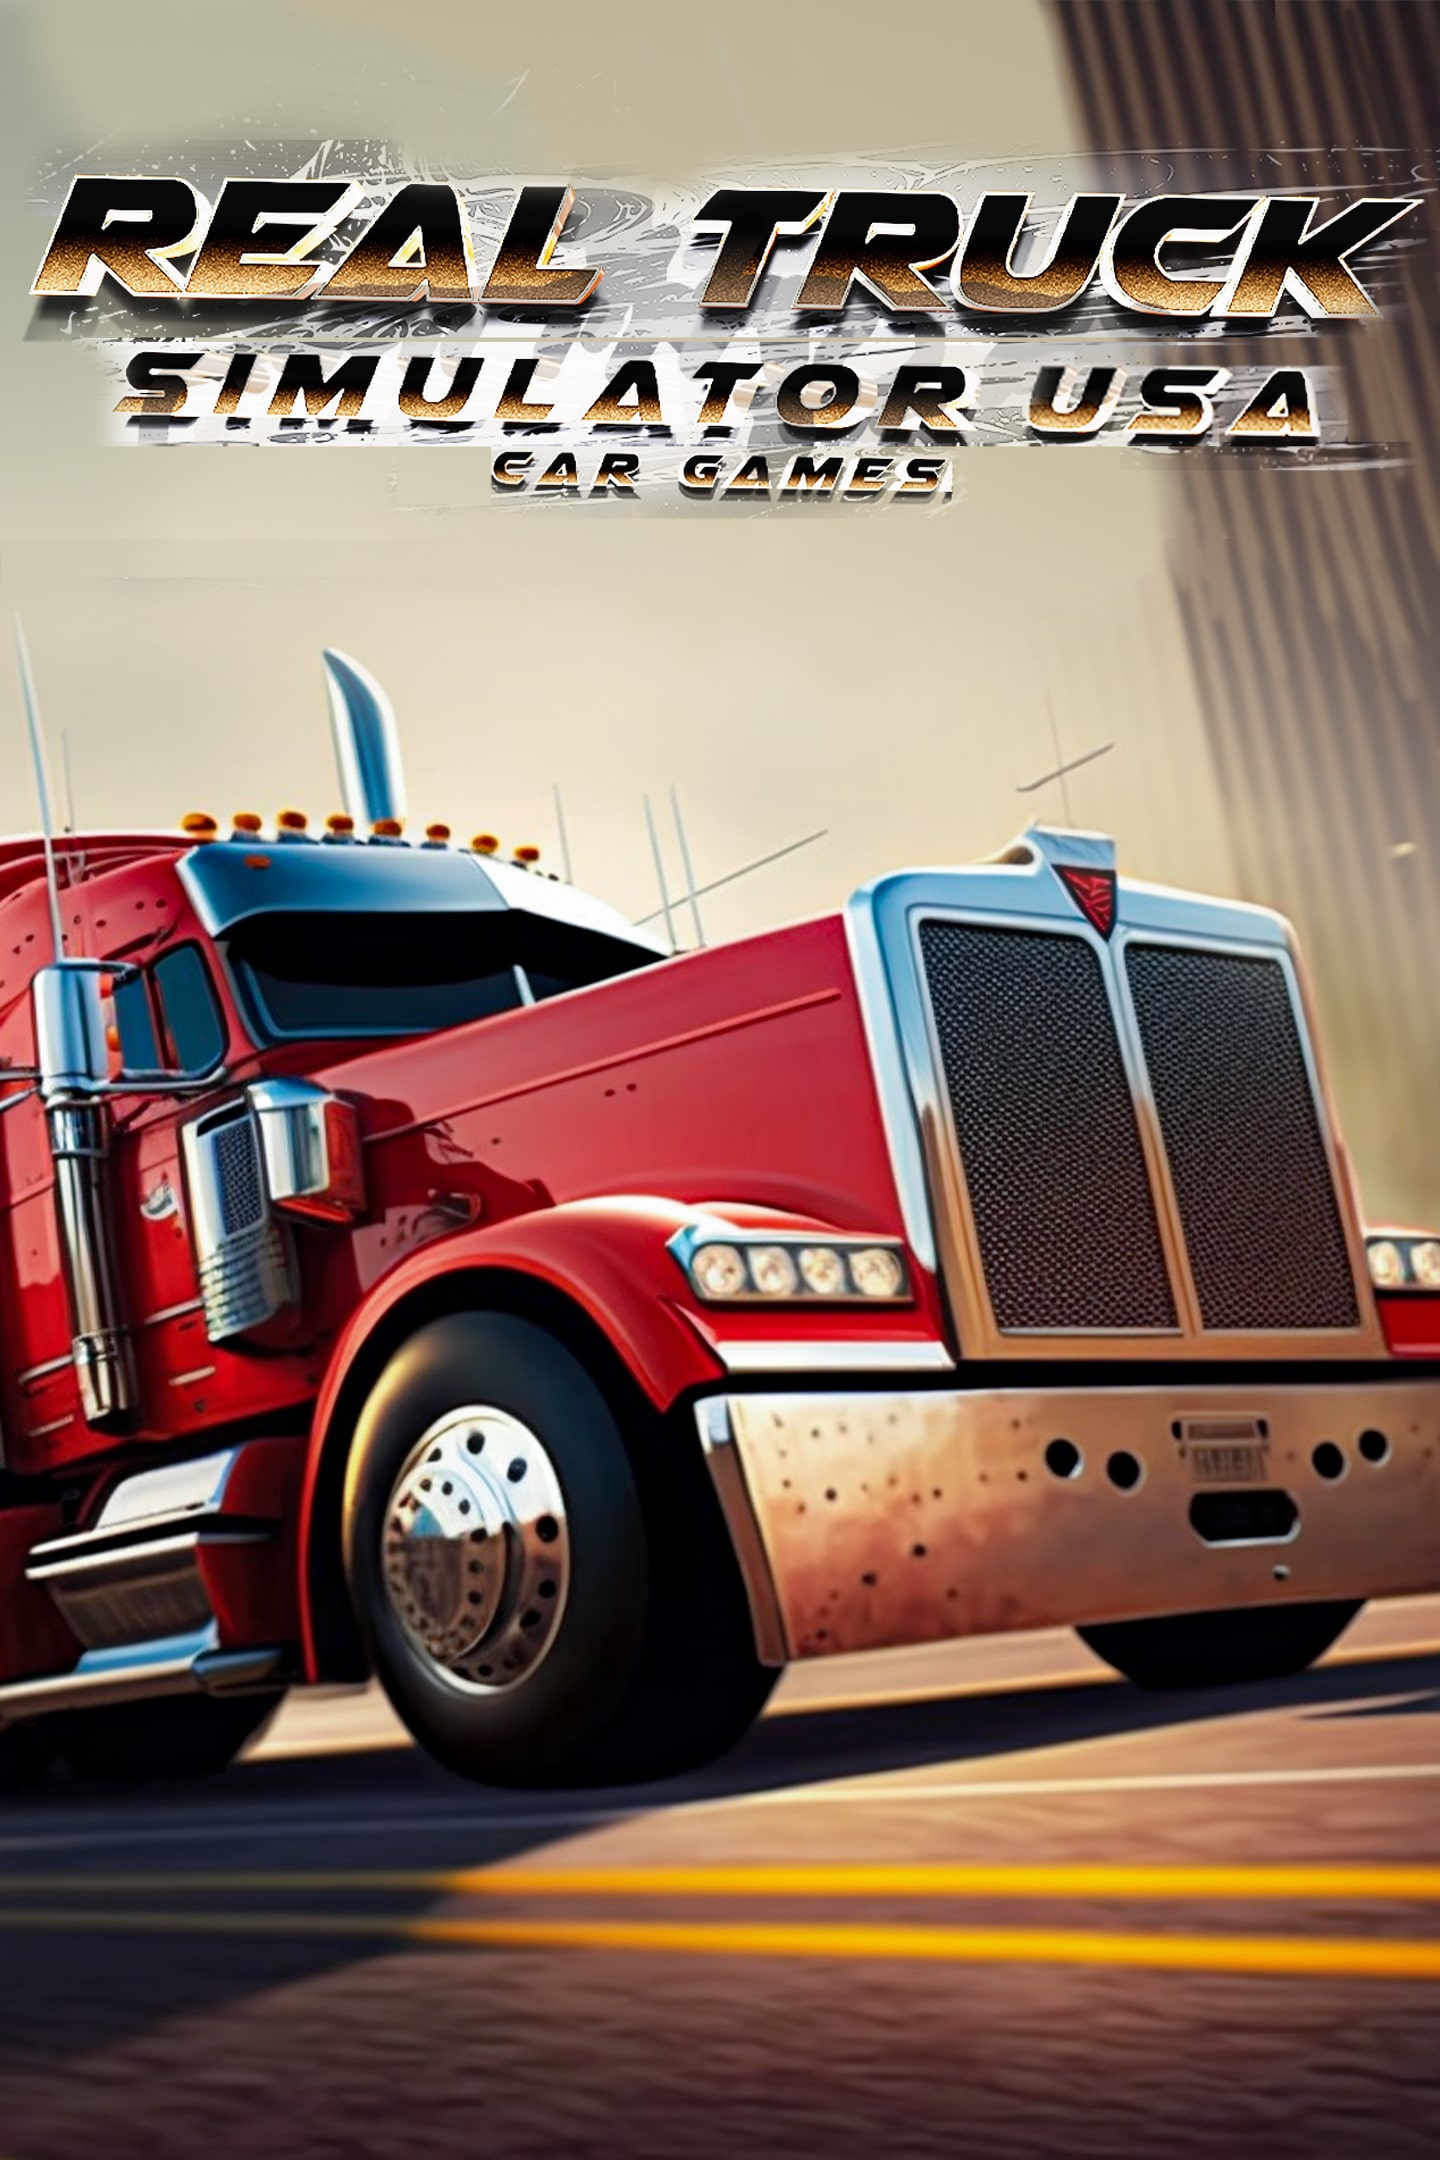 Real Simulator USA Car Games